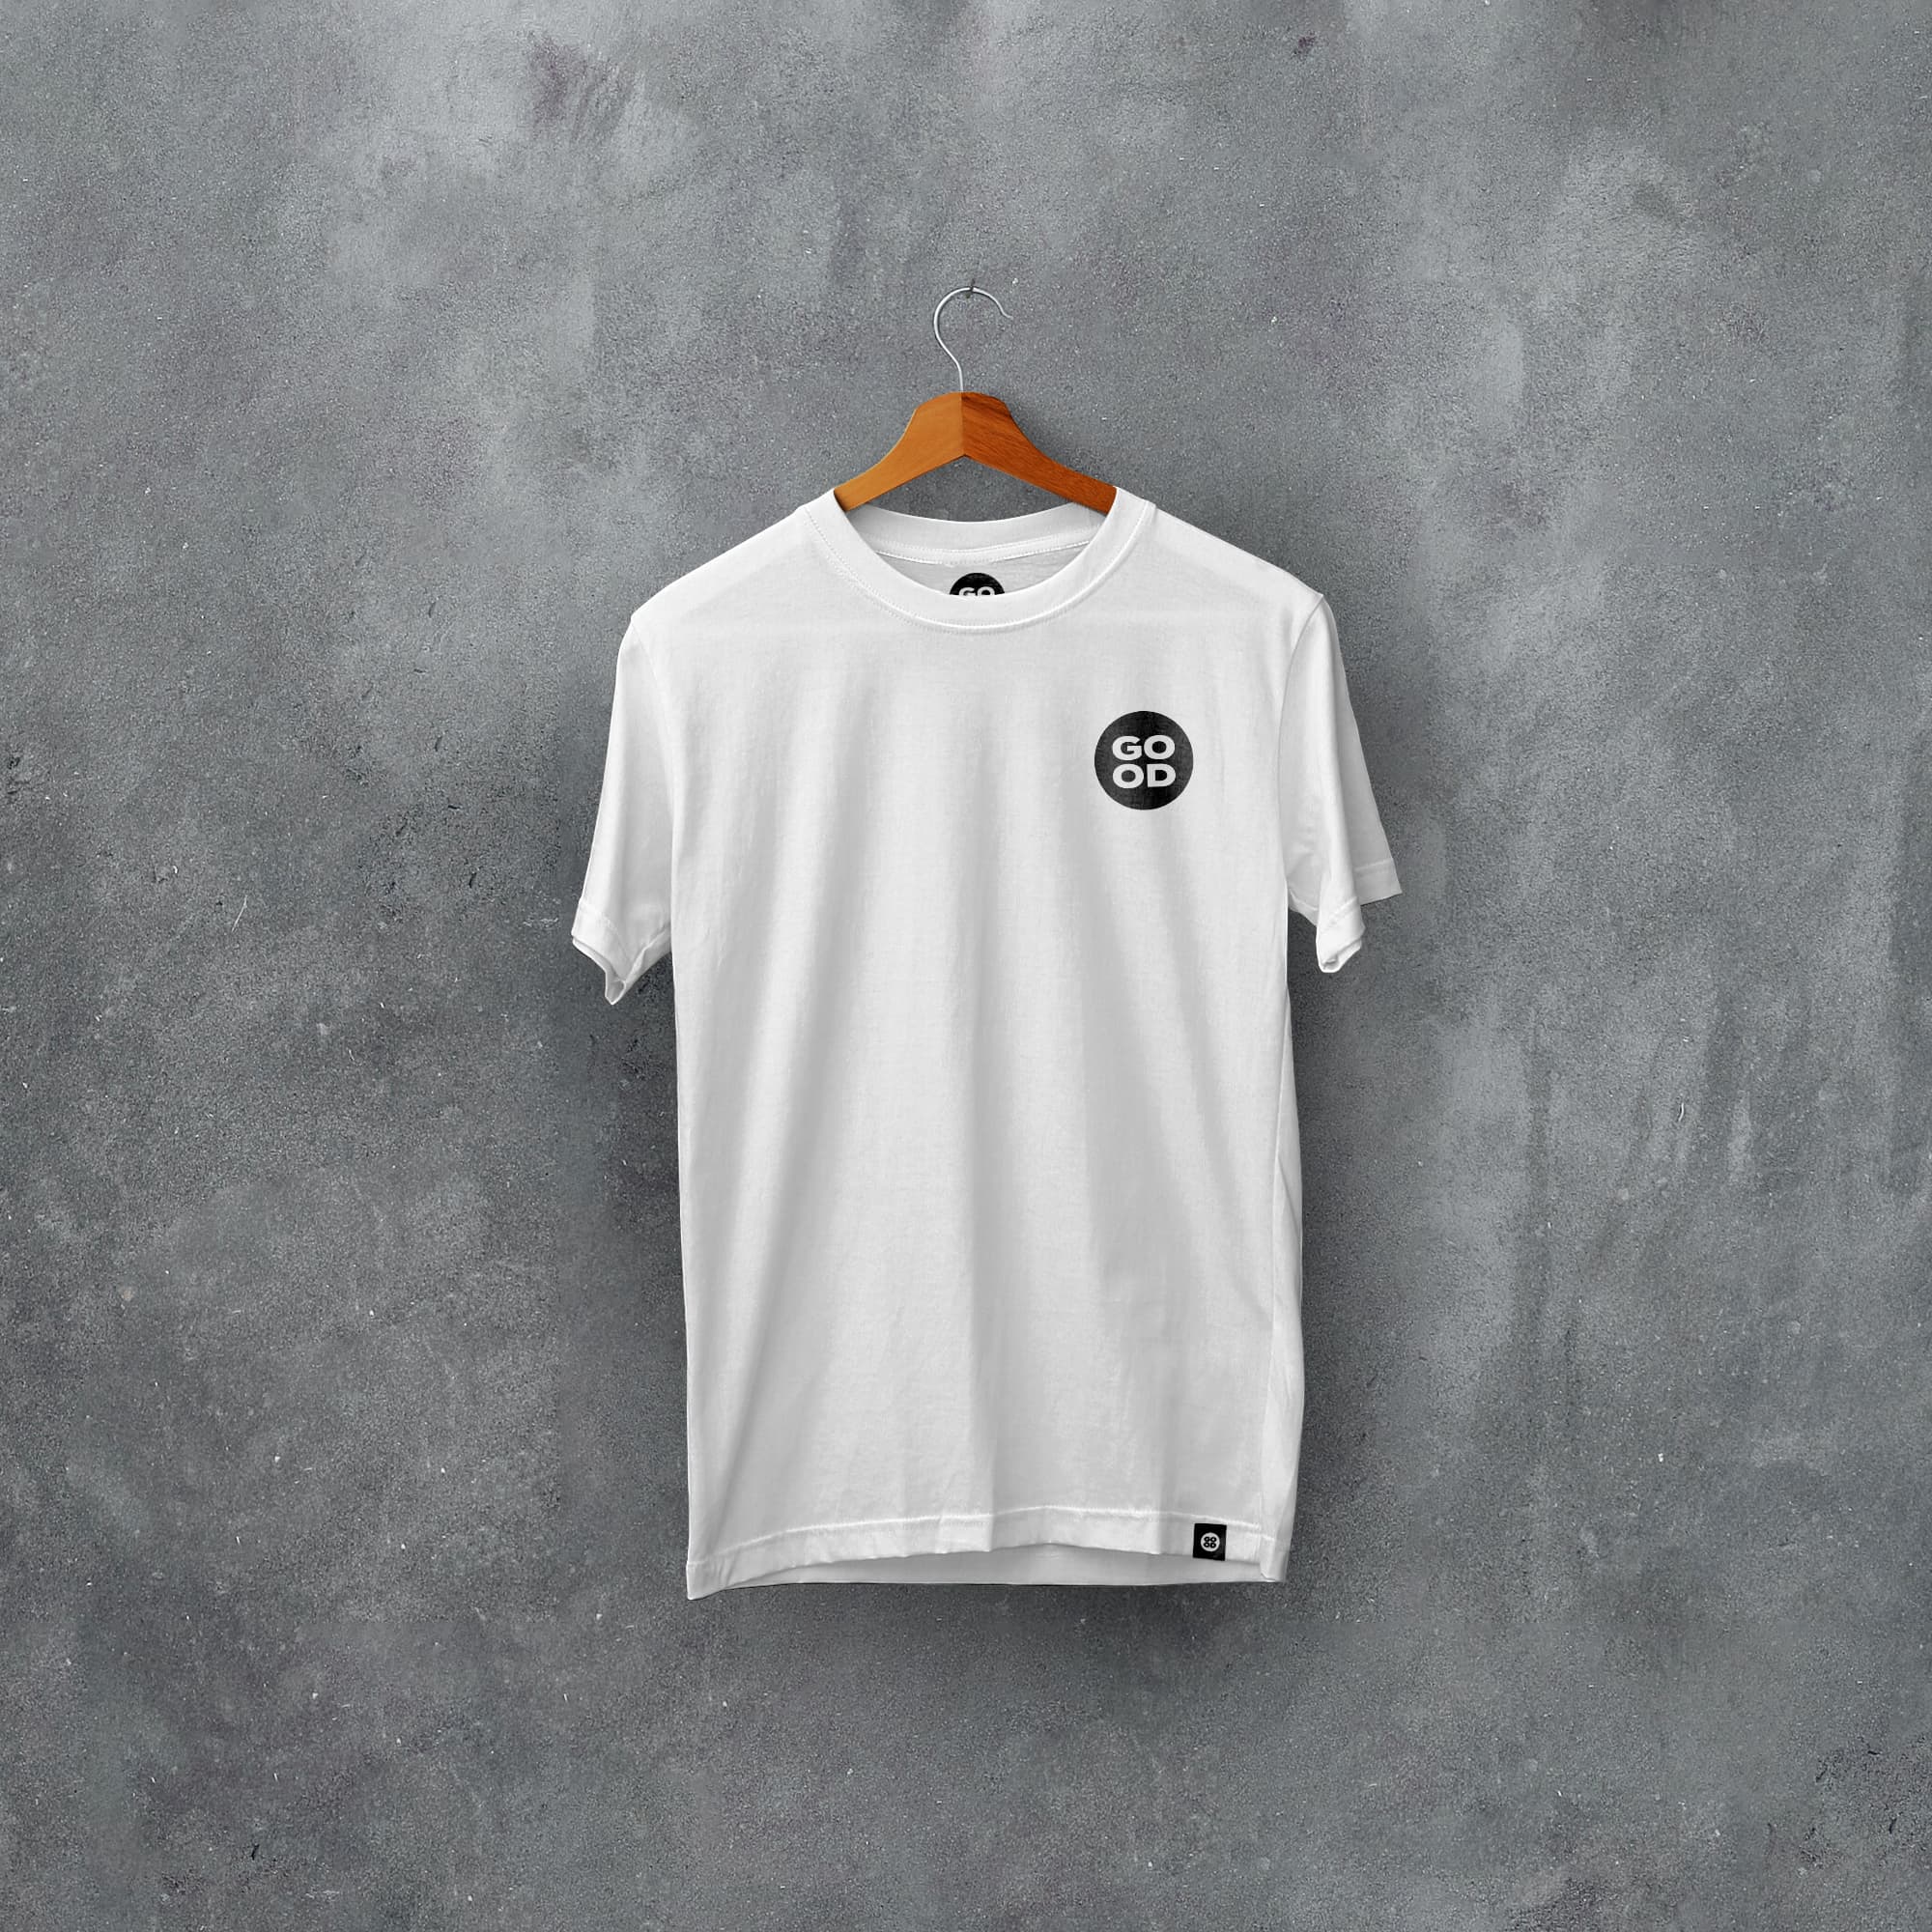 Torquay Classic Kits Football T-Shirt